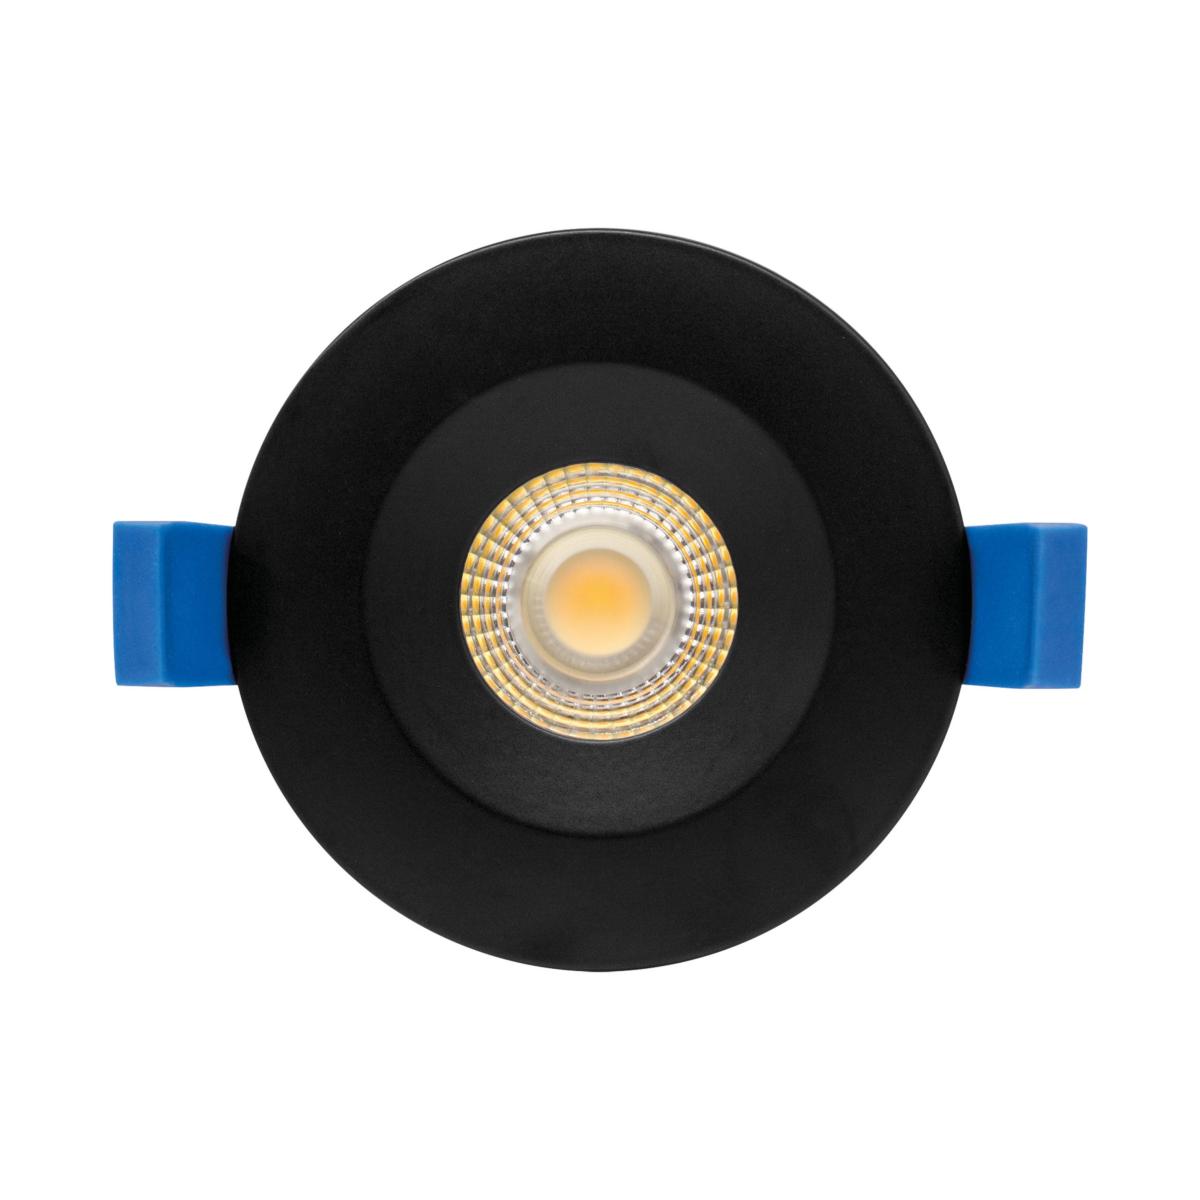 Tomosu Spot LED Encastrable Extra Plat 5W 450LM, IP44 Spot Etanche